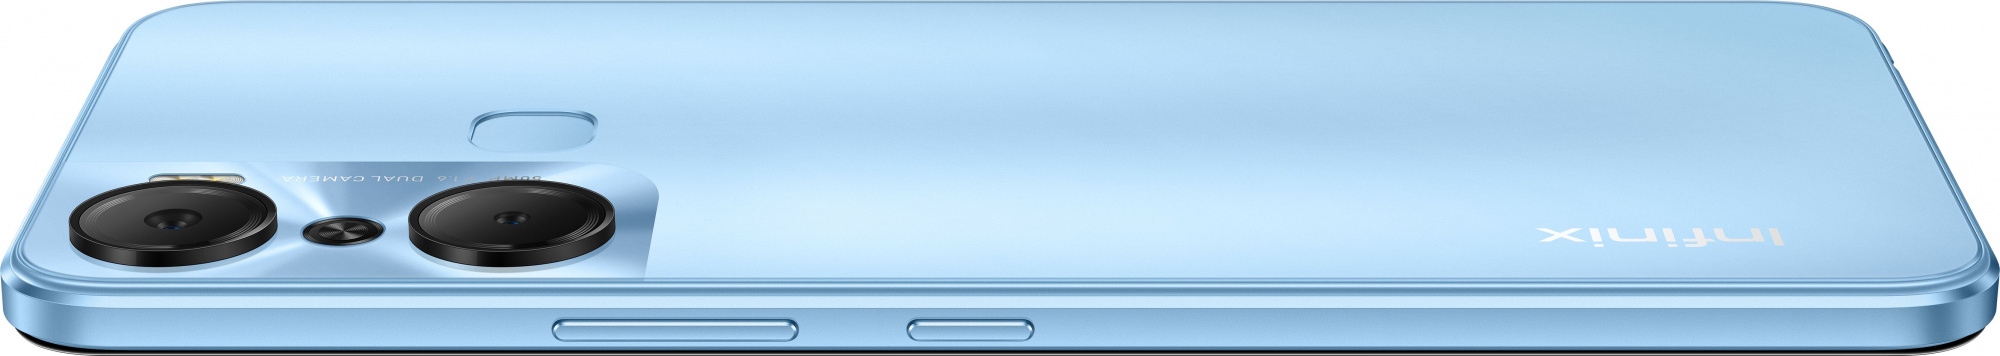 Смартфон Infinix X668C Hot 12 Pro 128Gb 8Gb синий моноблок 3G 4G 2Sim 6.6